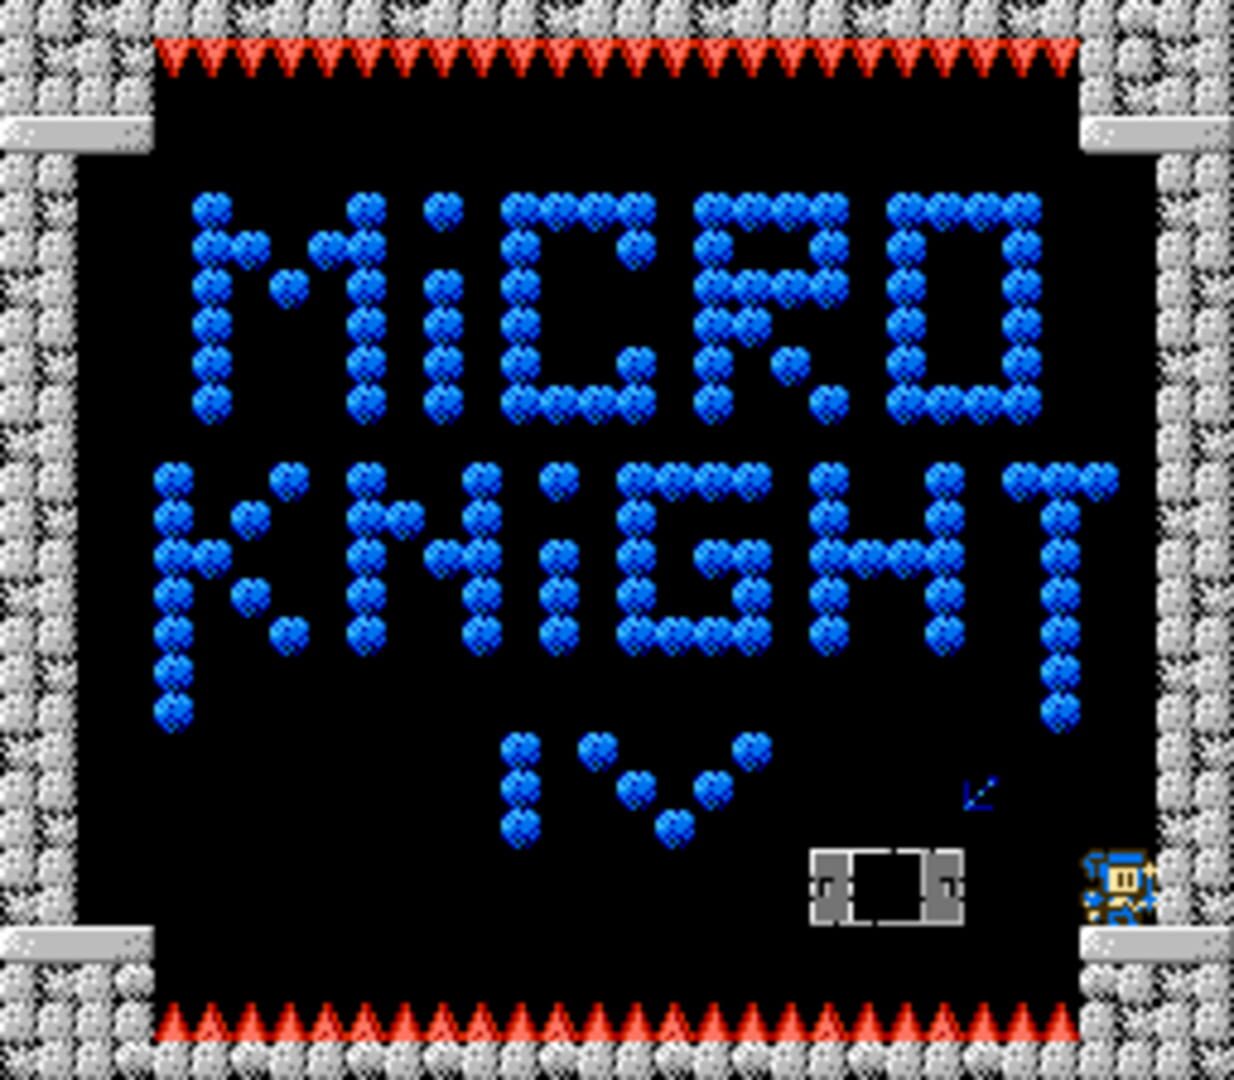 Micro Knight 4